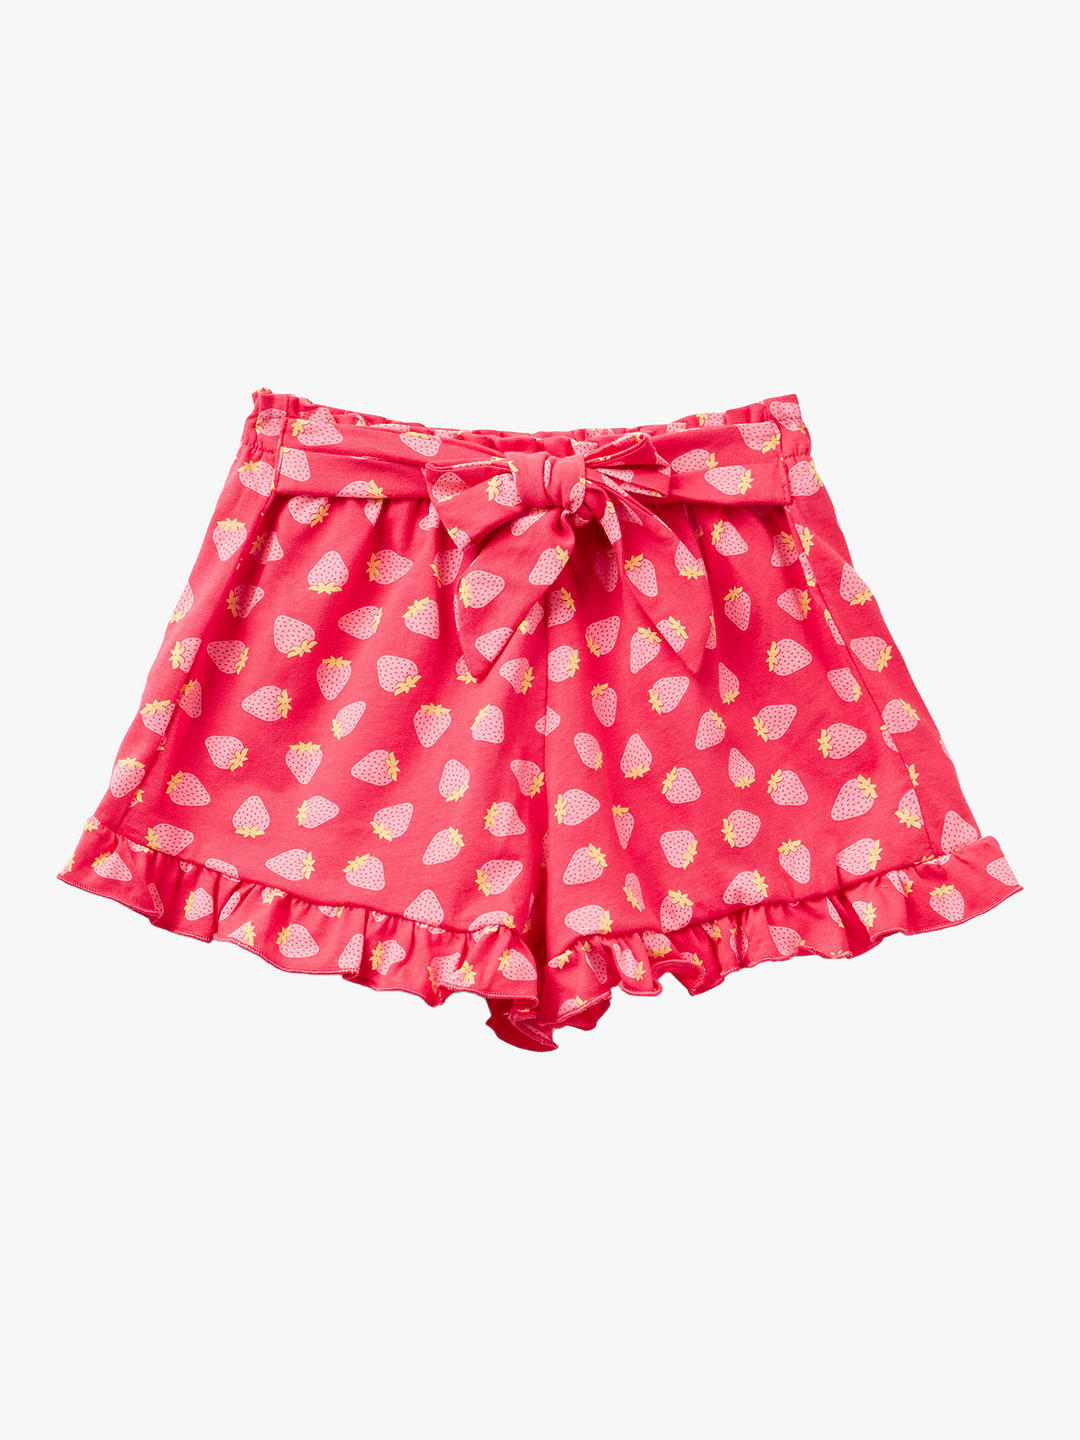 Benetton Kids' Strawberry Print Ruffle Tie Waist Shorts, Red/Multi